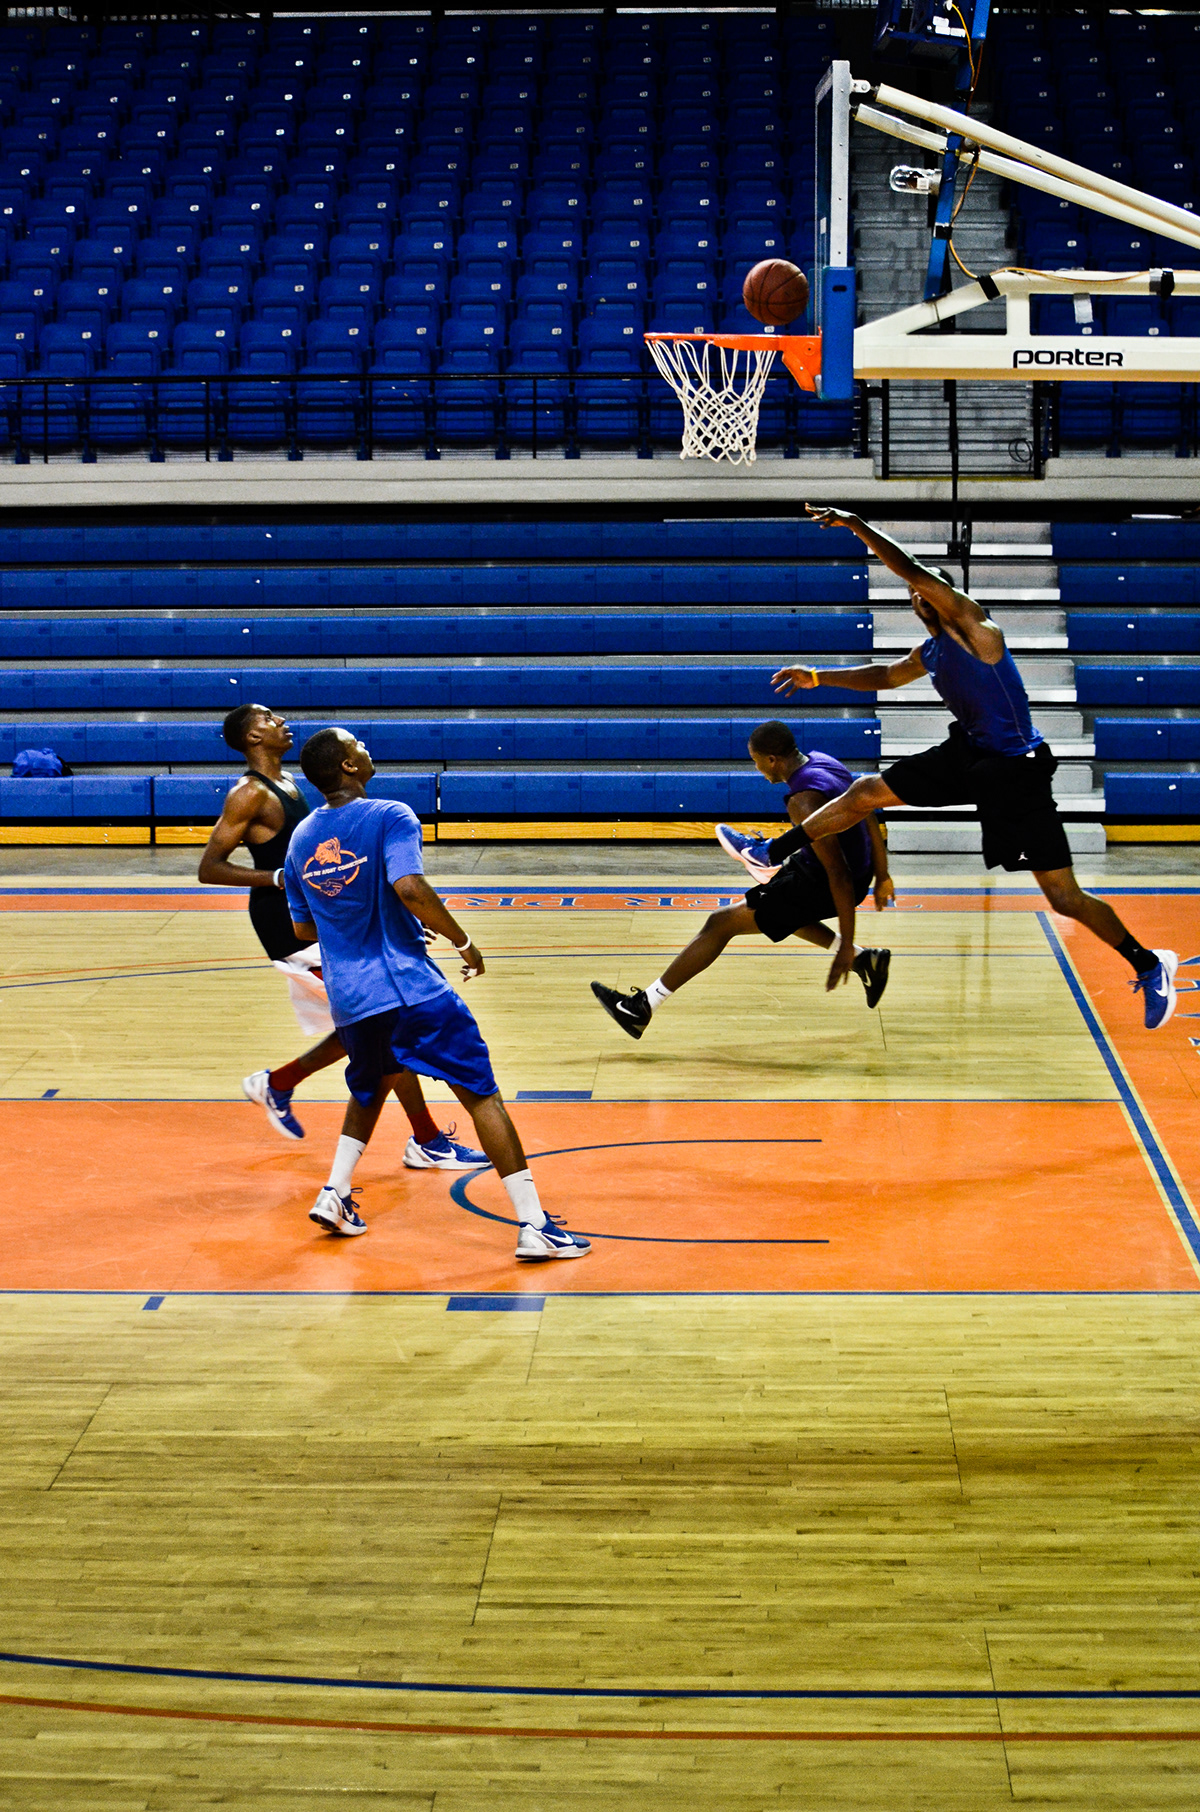 sports basketball shoot men Active playing DUNK dribble team play motion action scrimmage Nikon